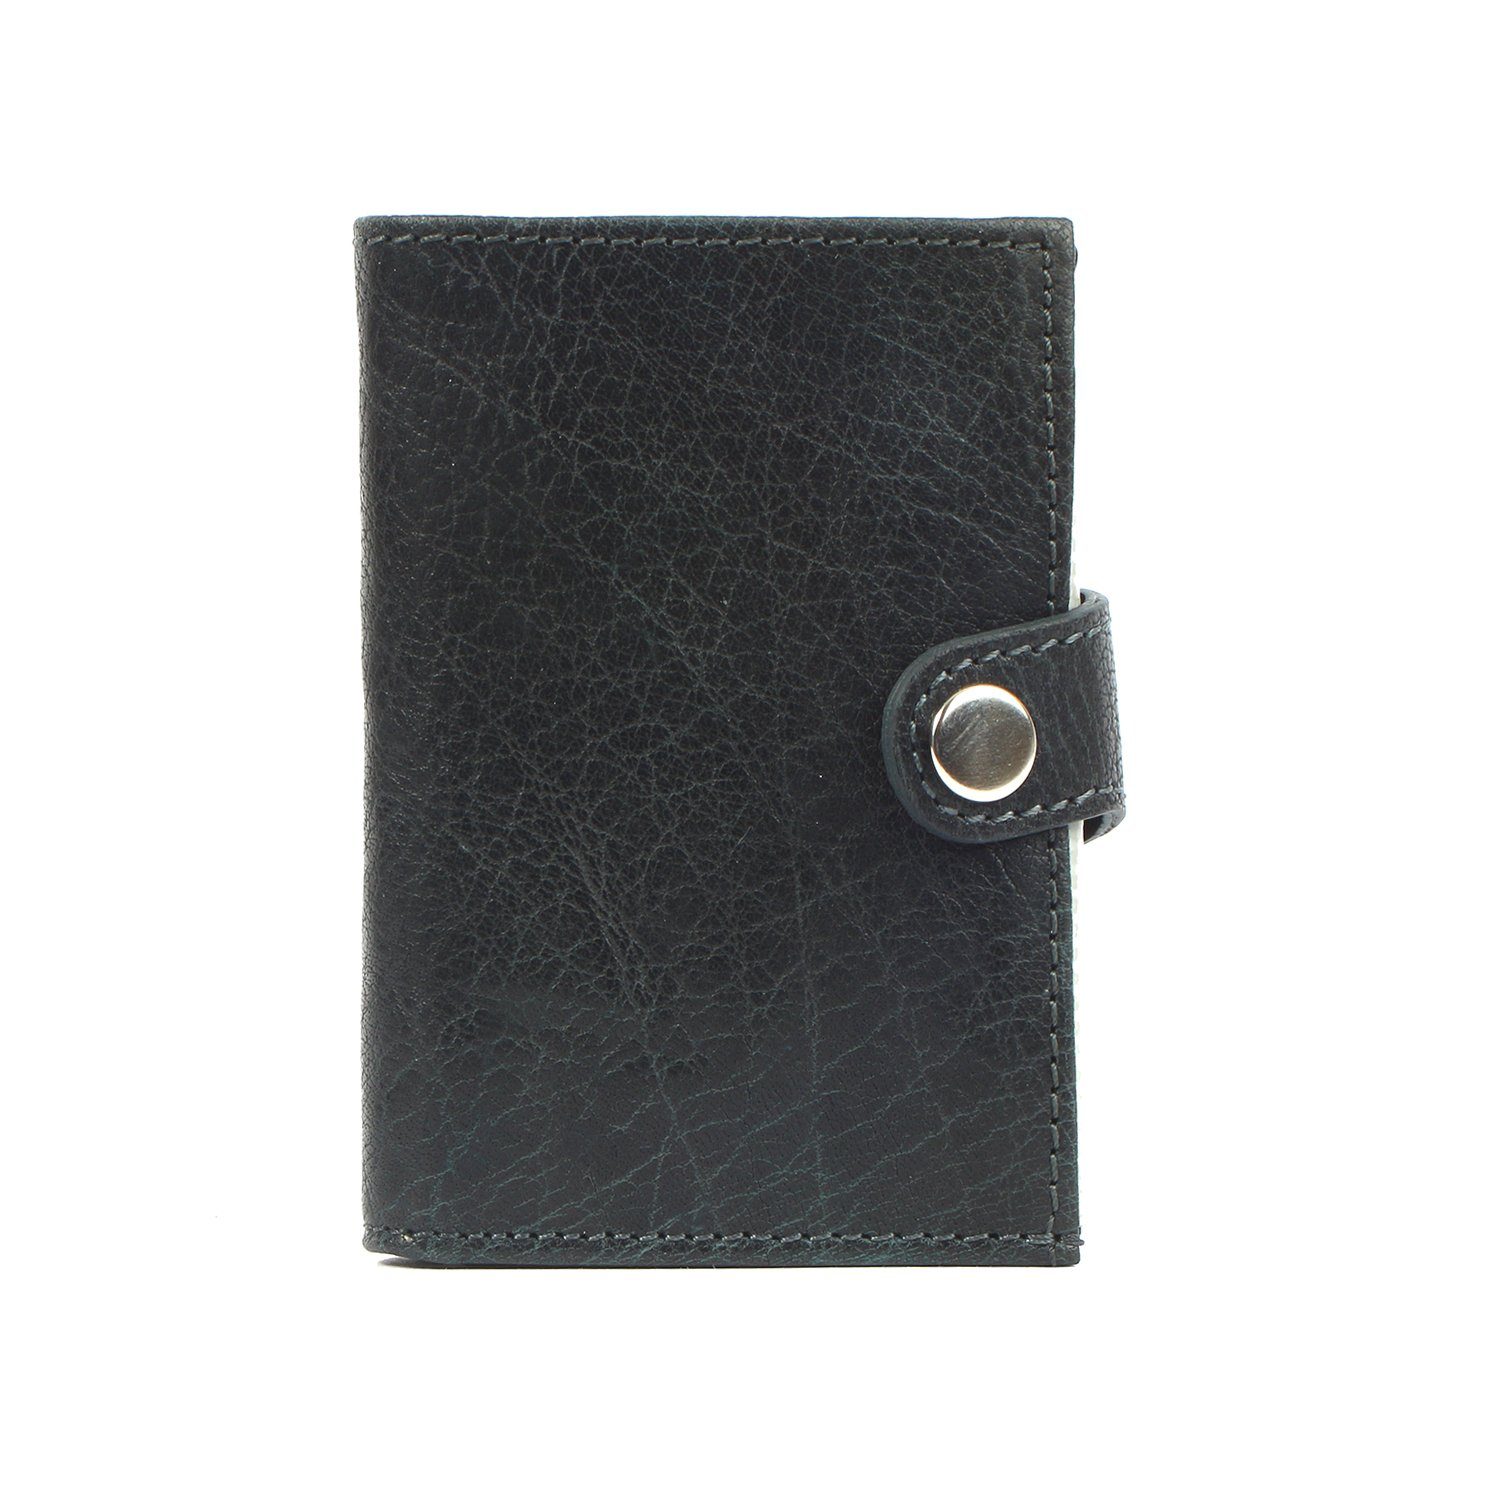 Upcycling noonyu Geldbörse Kreditkartenbörse Leder leather, Margelisch Mini aus steelblue single